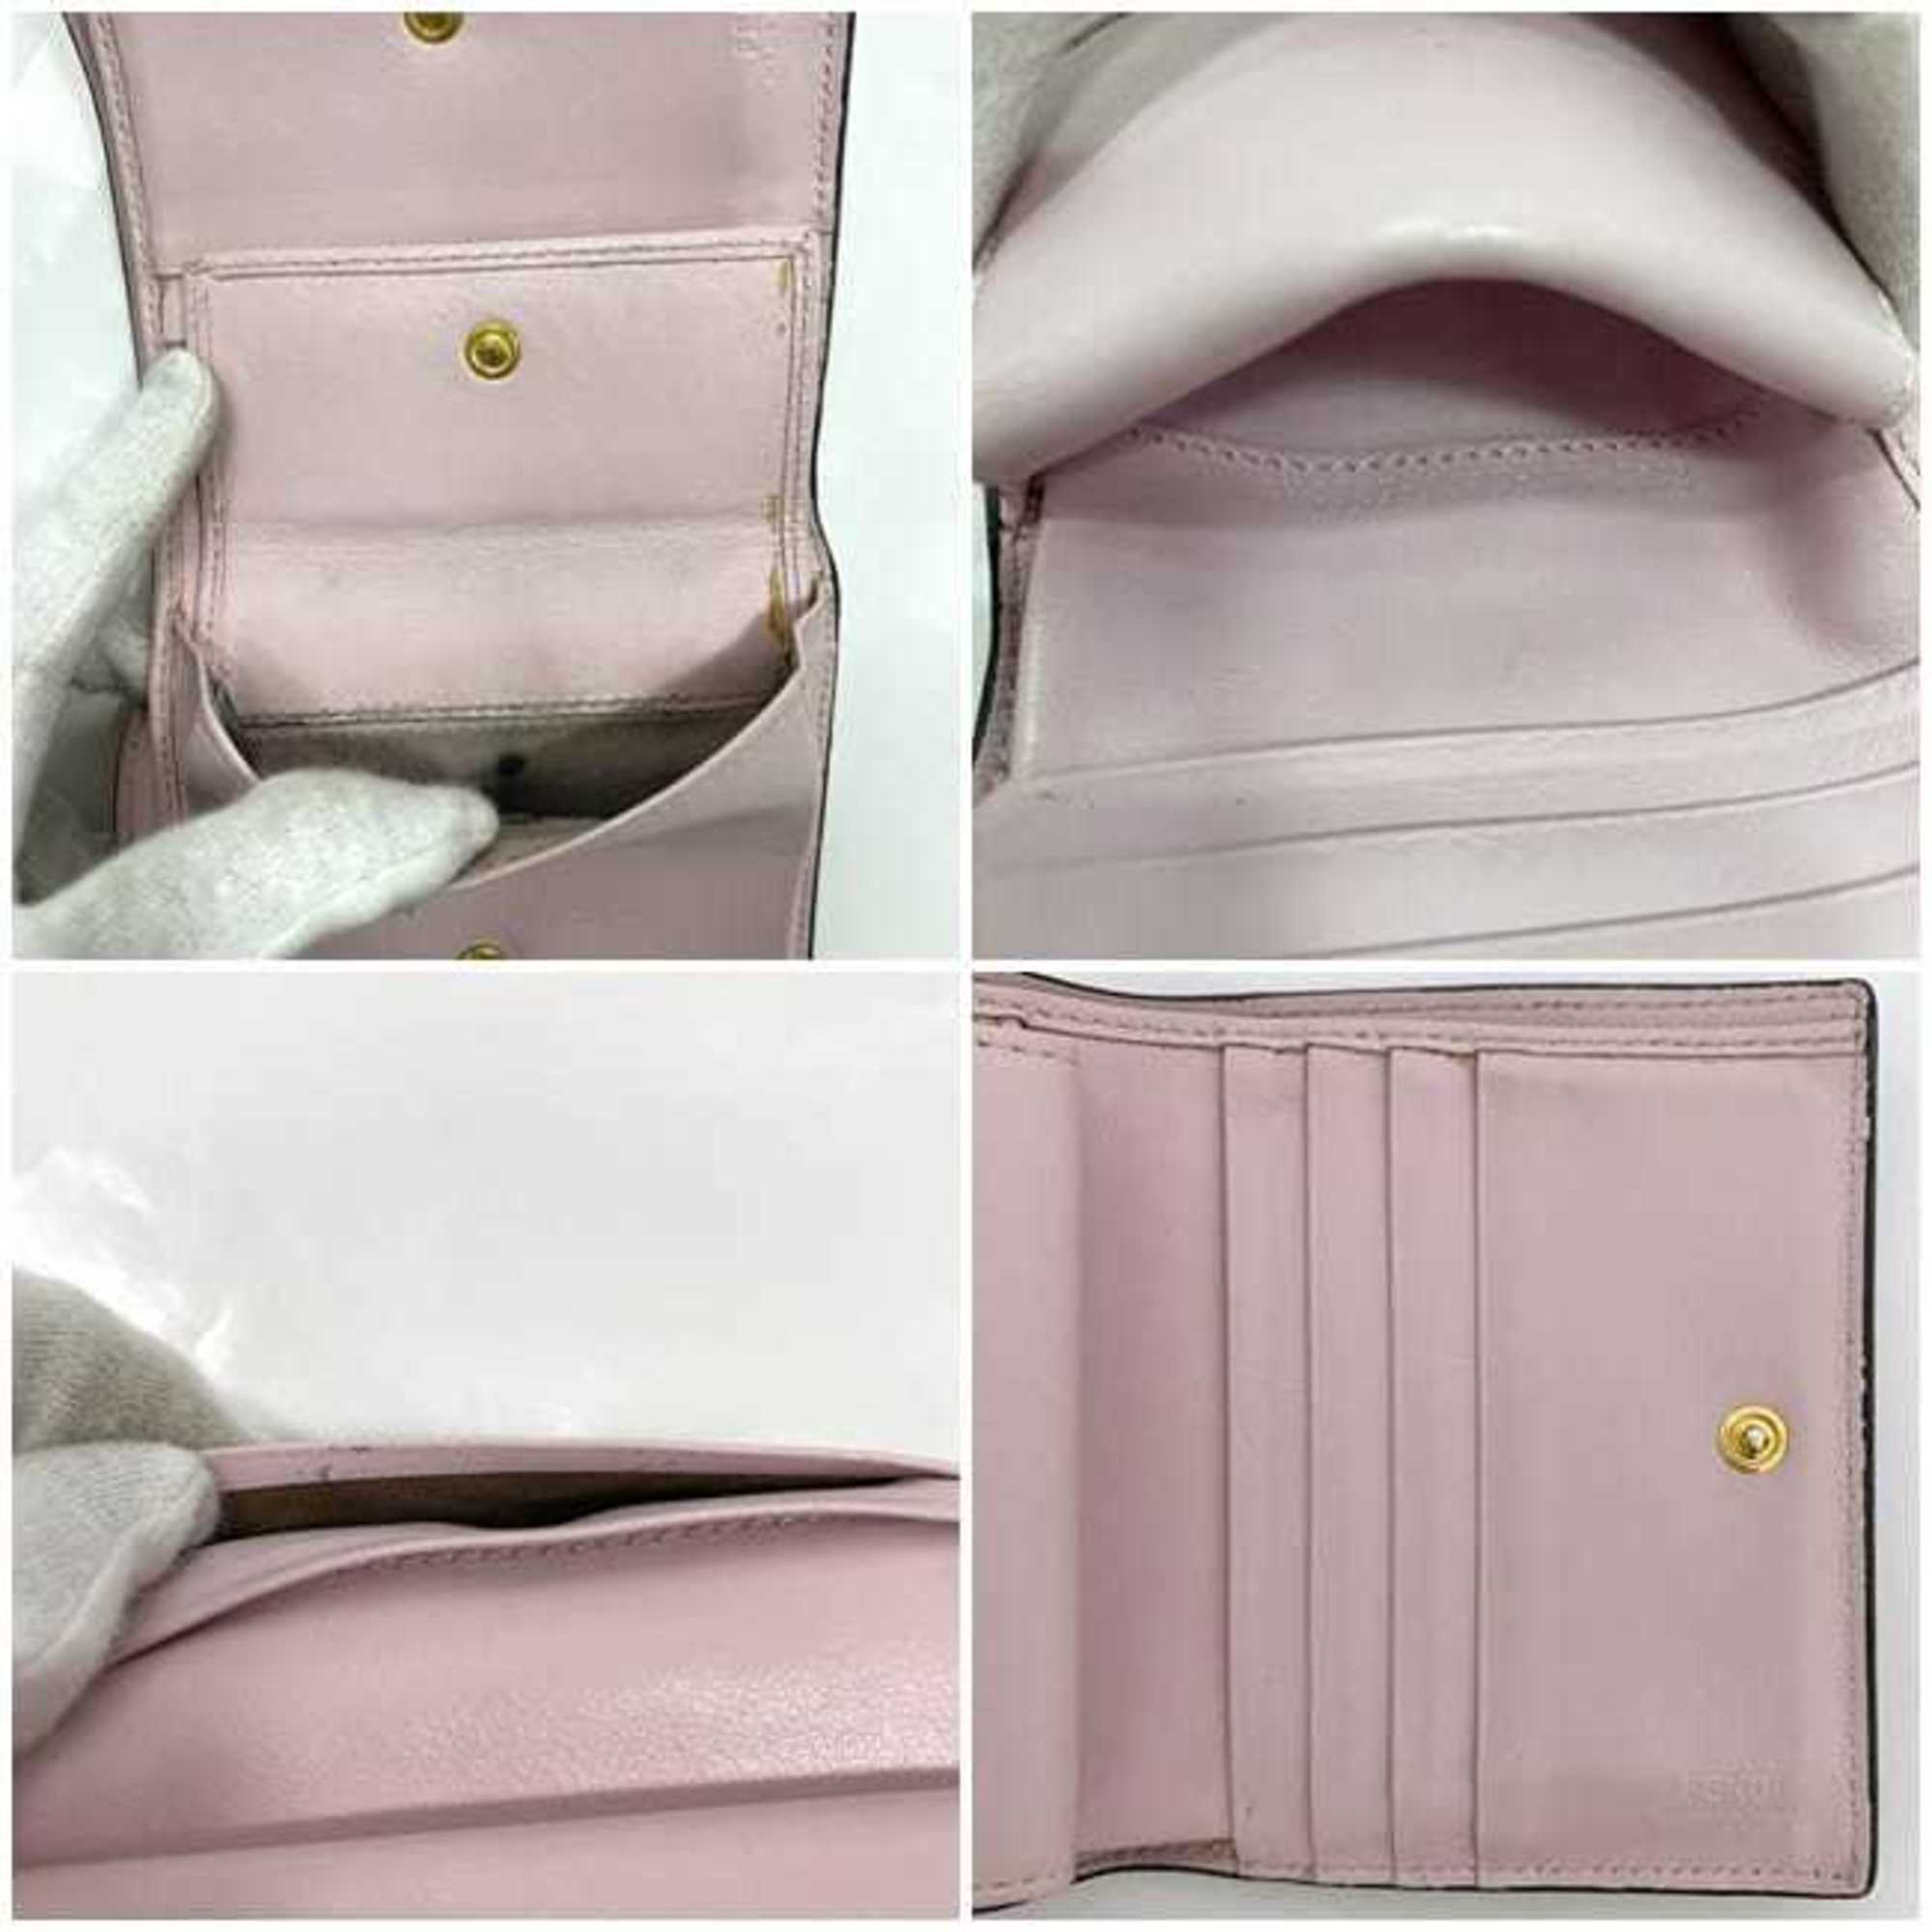 Fendi Bi-fold Wallet Pink F Is 8M0387 ec-20532 Leather FENDI Compact Women's Retro